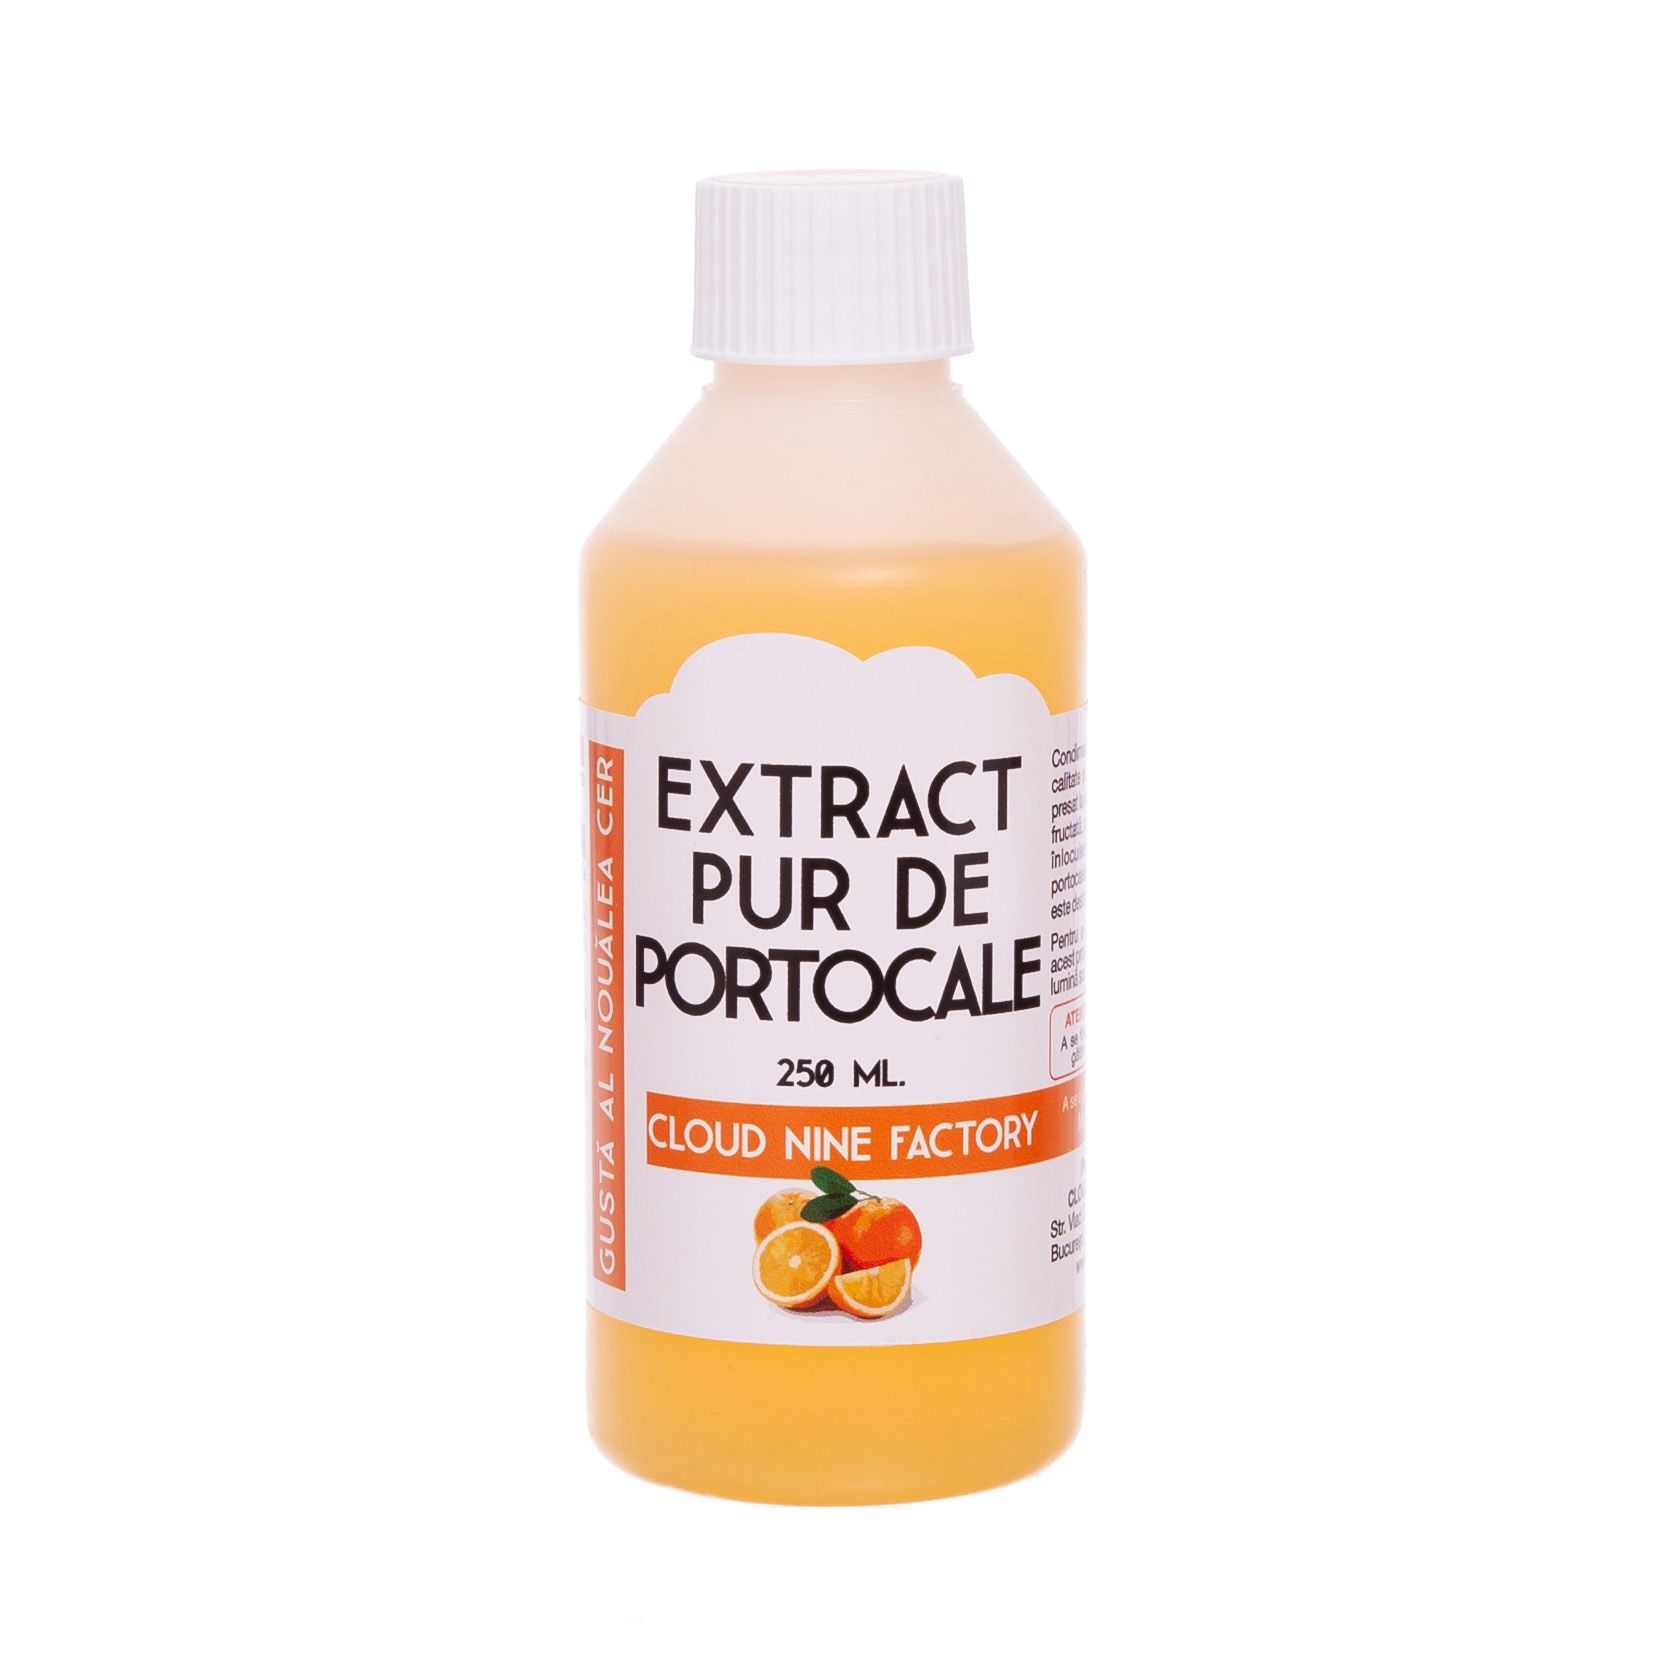 Extract Pur de Portocale (250 ml.) extract pur de portocale (250 ml.) - IMG 2628 - Extract Pur de Portocale (250 ml.) cloud nine factory - IMG 2628 - Extract Pur de Portocale